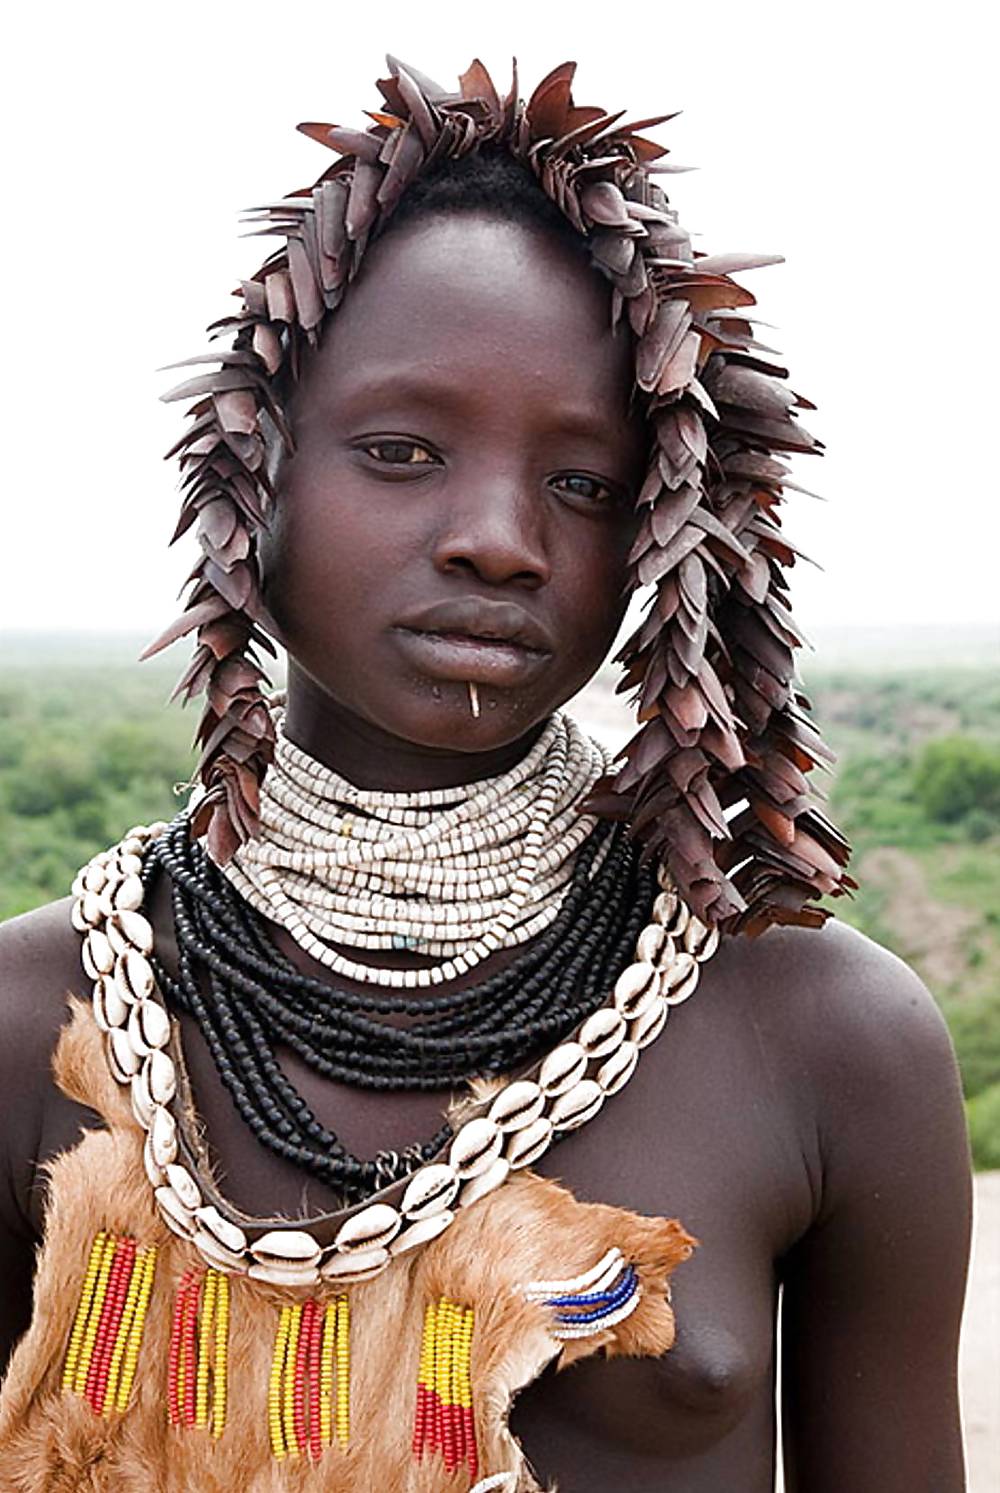 Jungle girls from Kenia #15313870